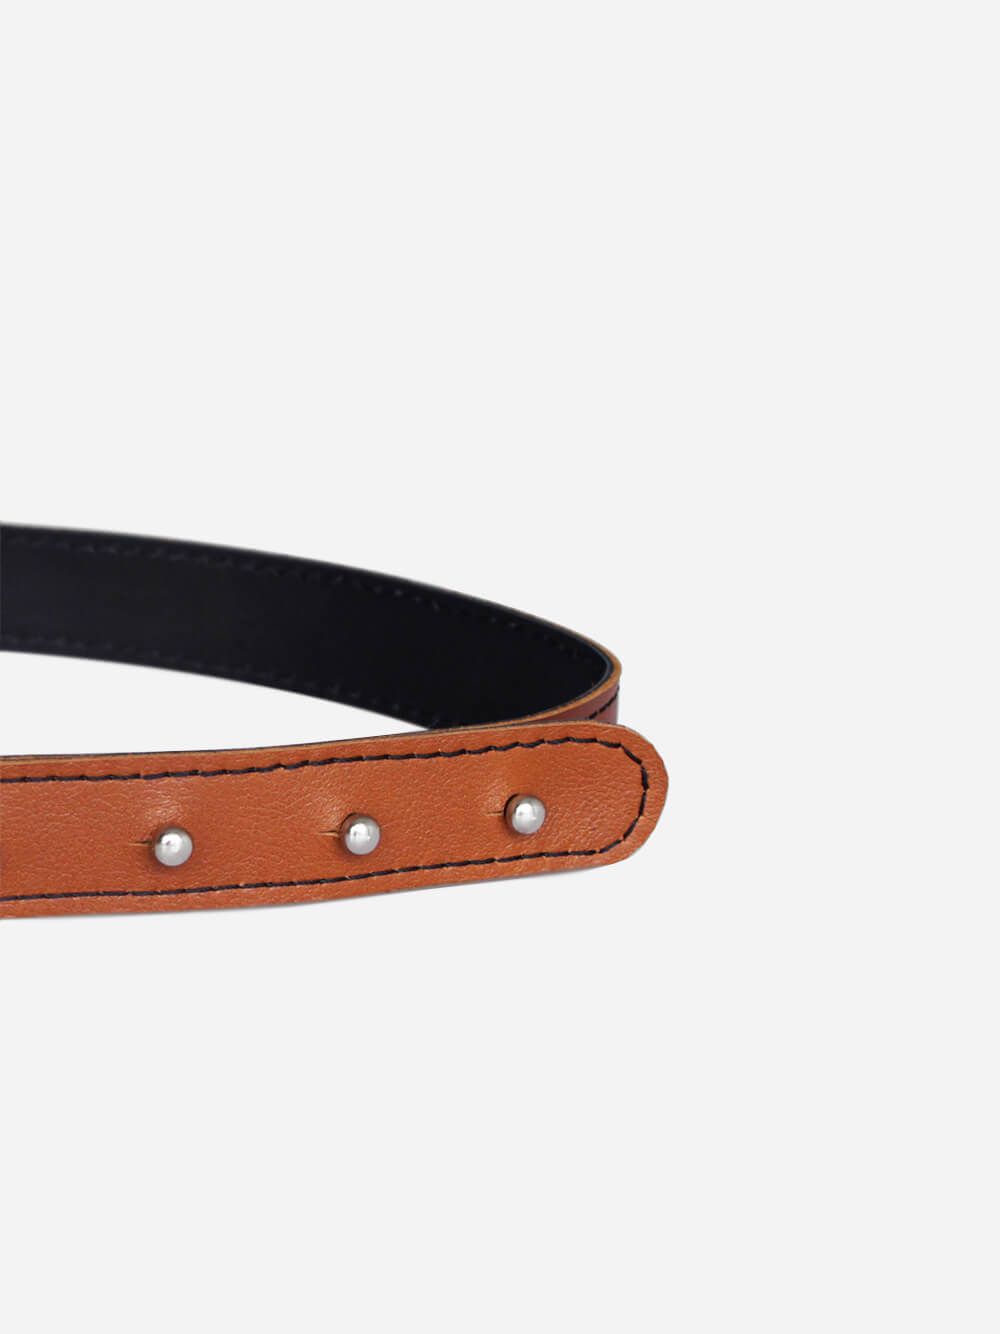 Francis Leather Brown Belt | Tomaz